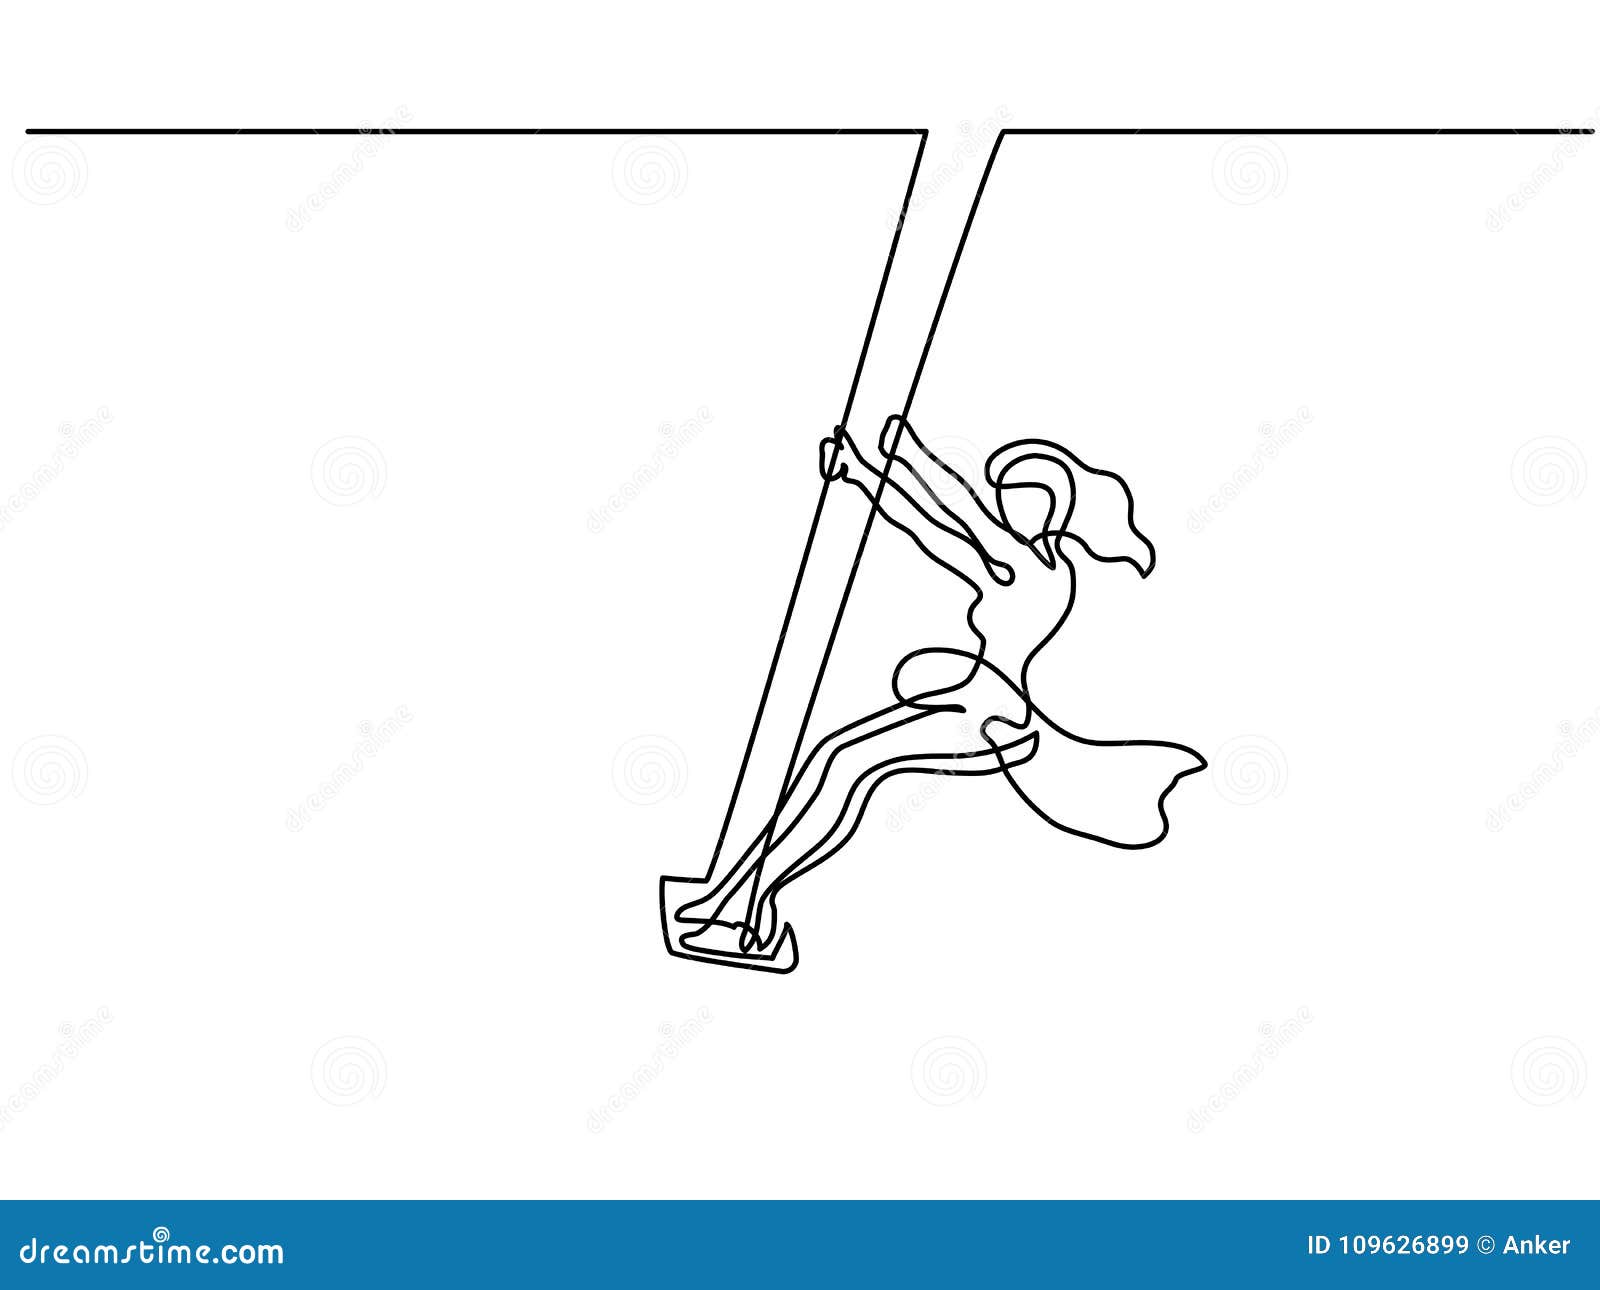 Girl swinging on swing stock vector. Illustration of happy - 109626899